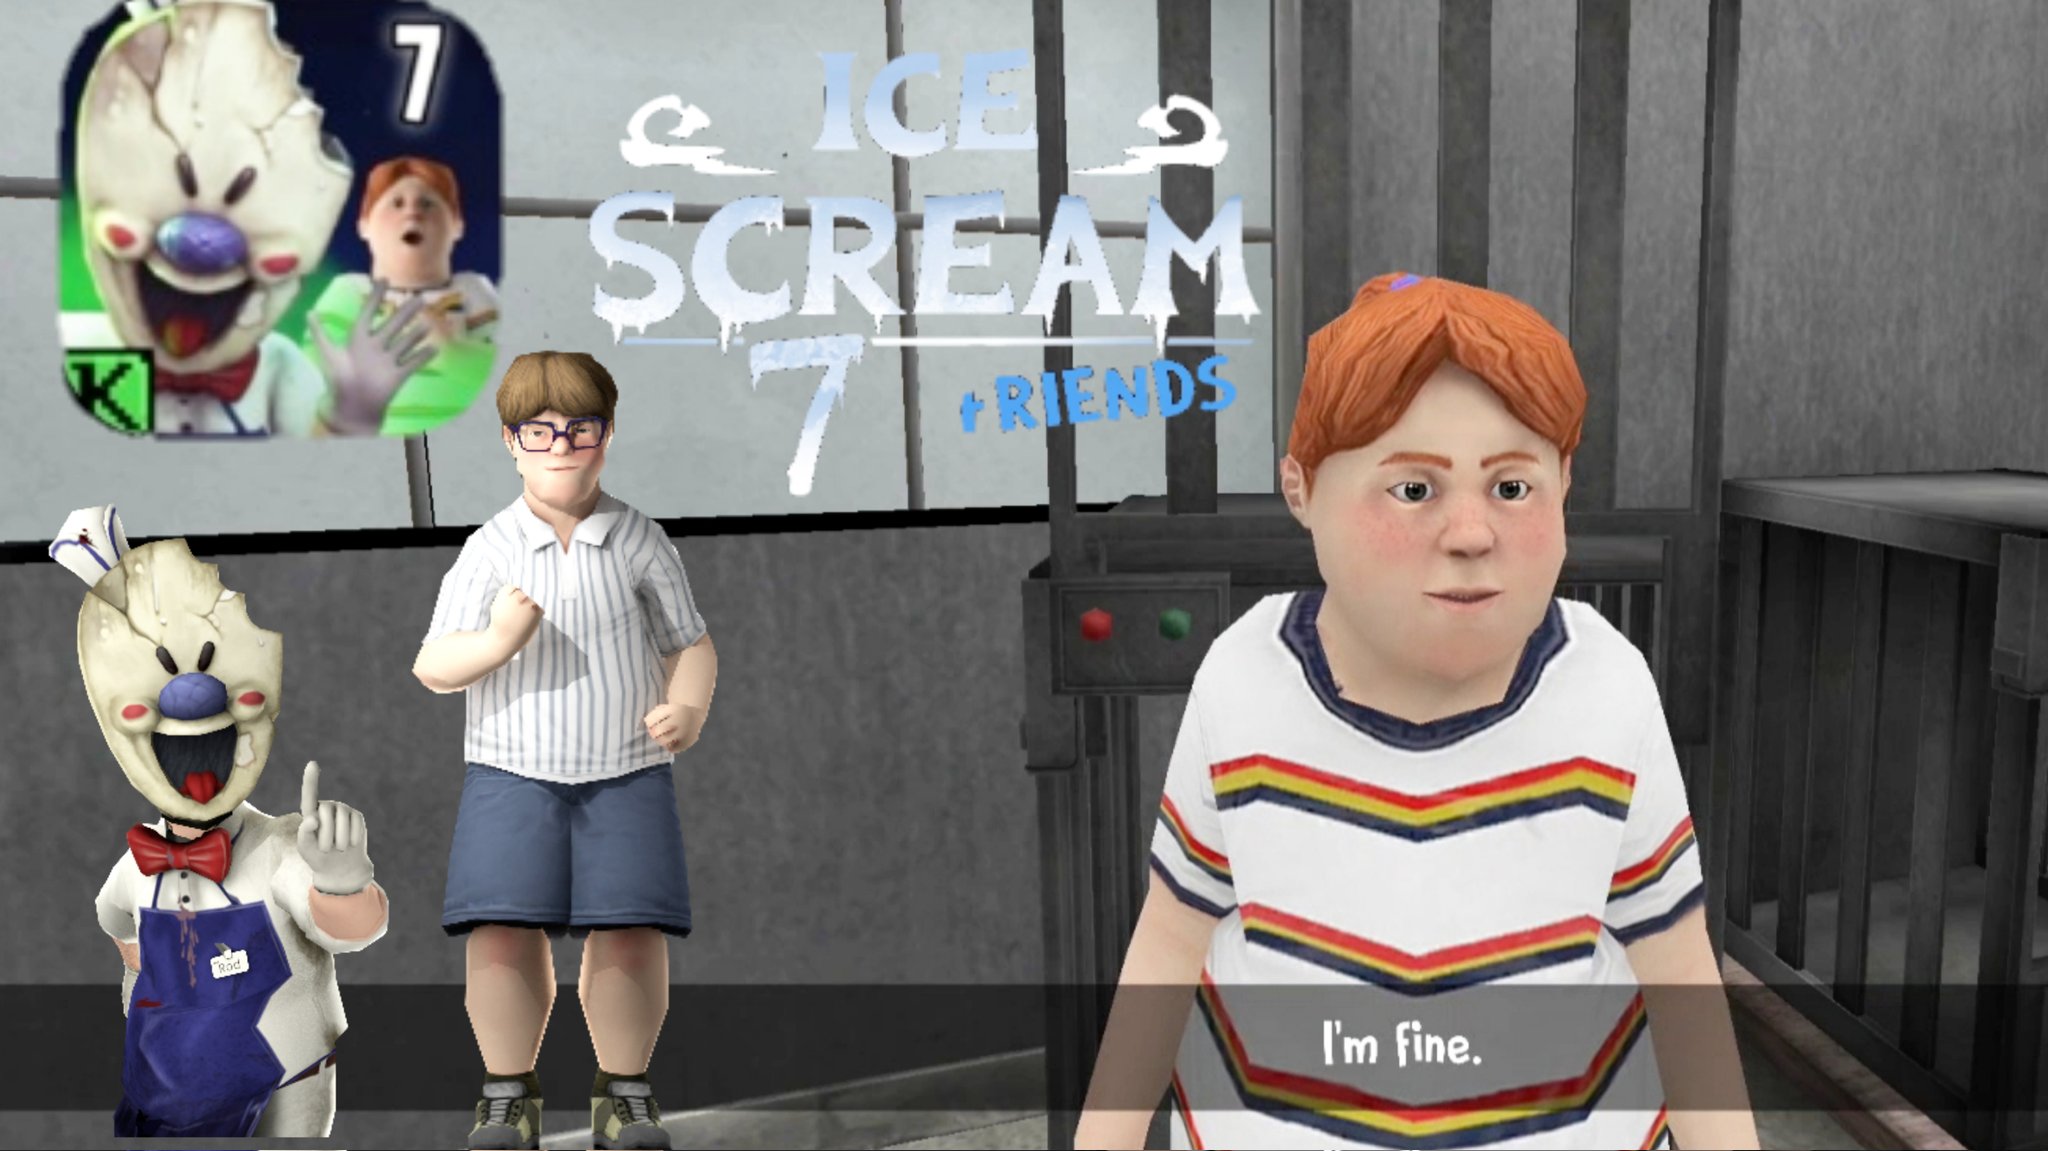 Caffeinated Gamer YT 300K🎮 on X:  Ice Scream 7  fan-made by A Twelve #IceScream7 #IceScream #Keplerians #CaffeinatedGamer   / X